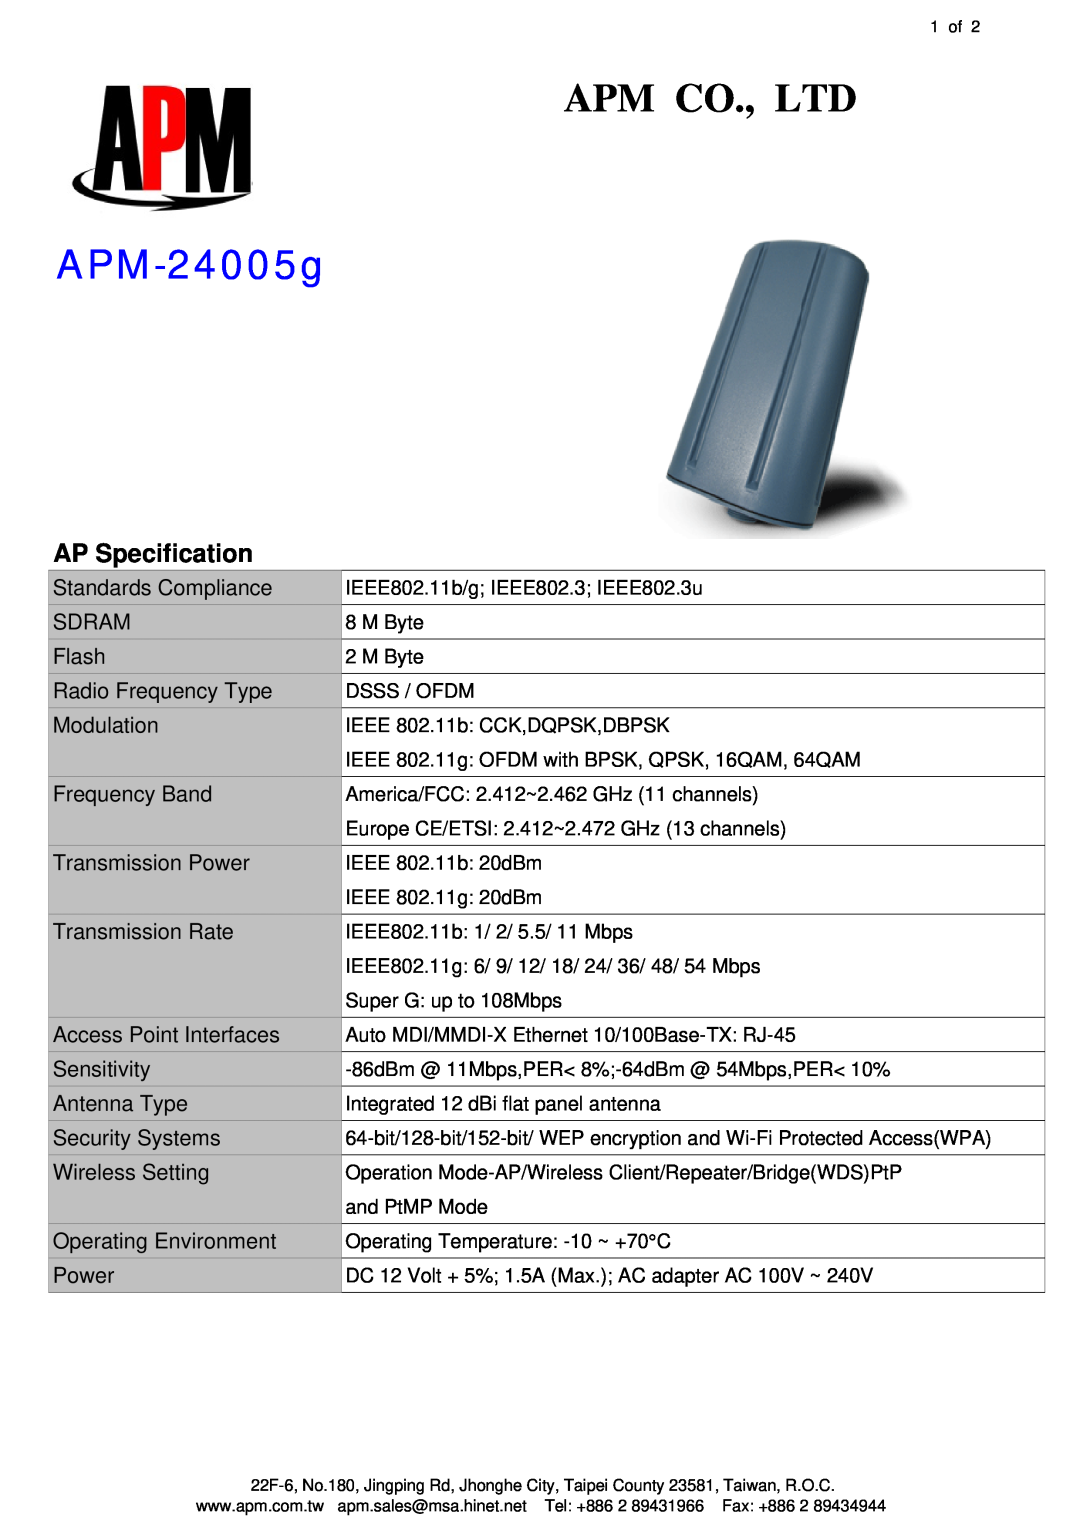 APM 24005G manual AP Specification, APM-24005g 